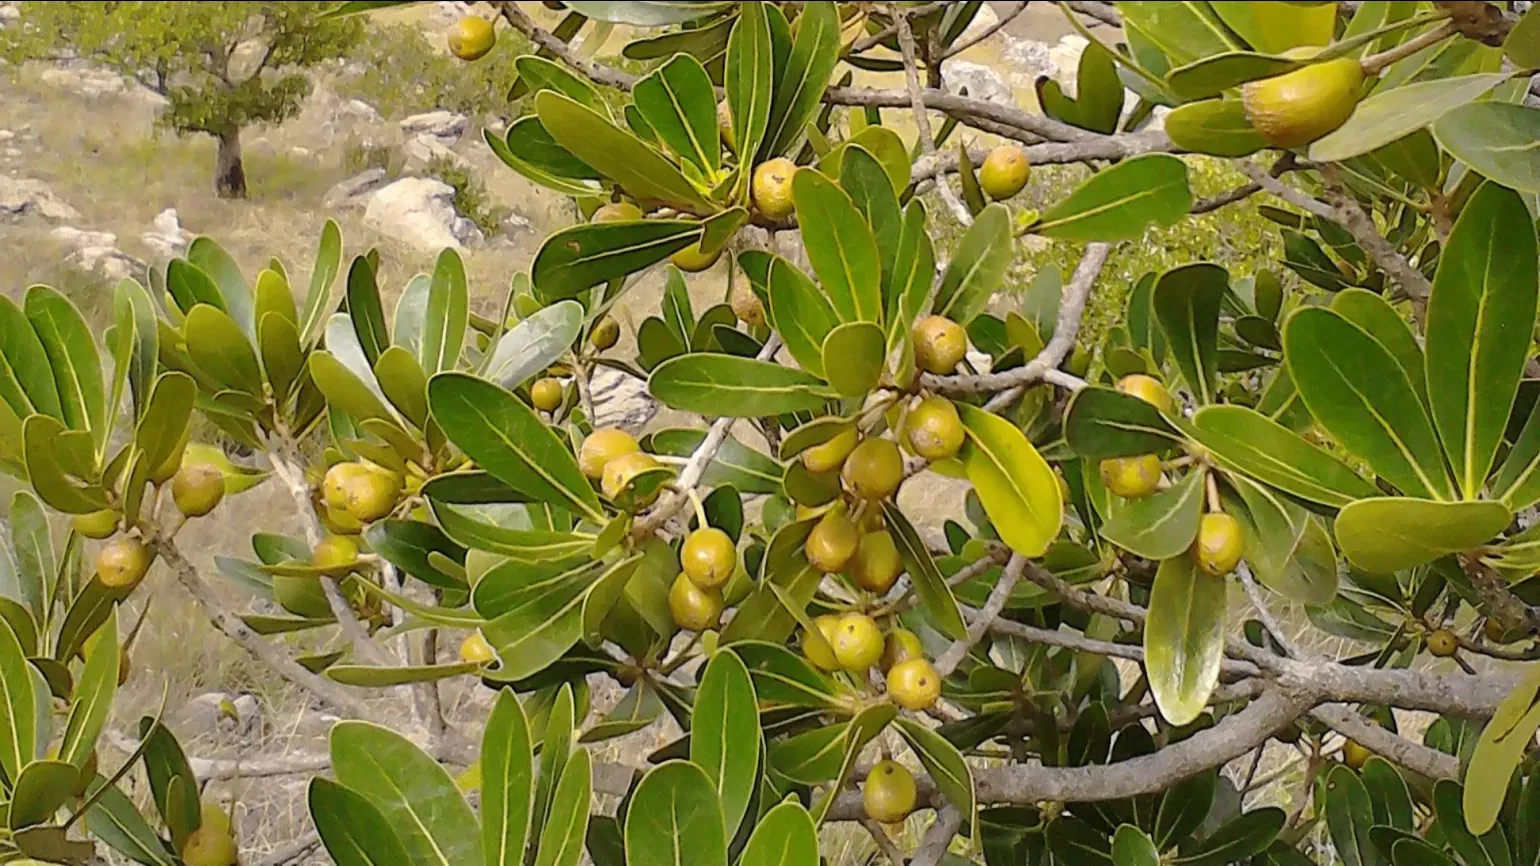 Small green-yellow berries growing amongst dark green teardrop shaped leaves